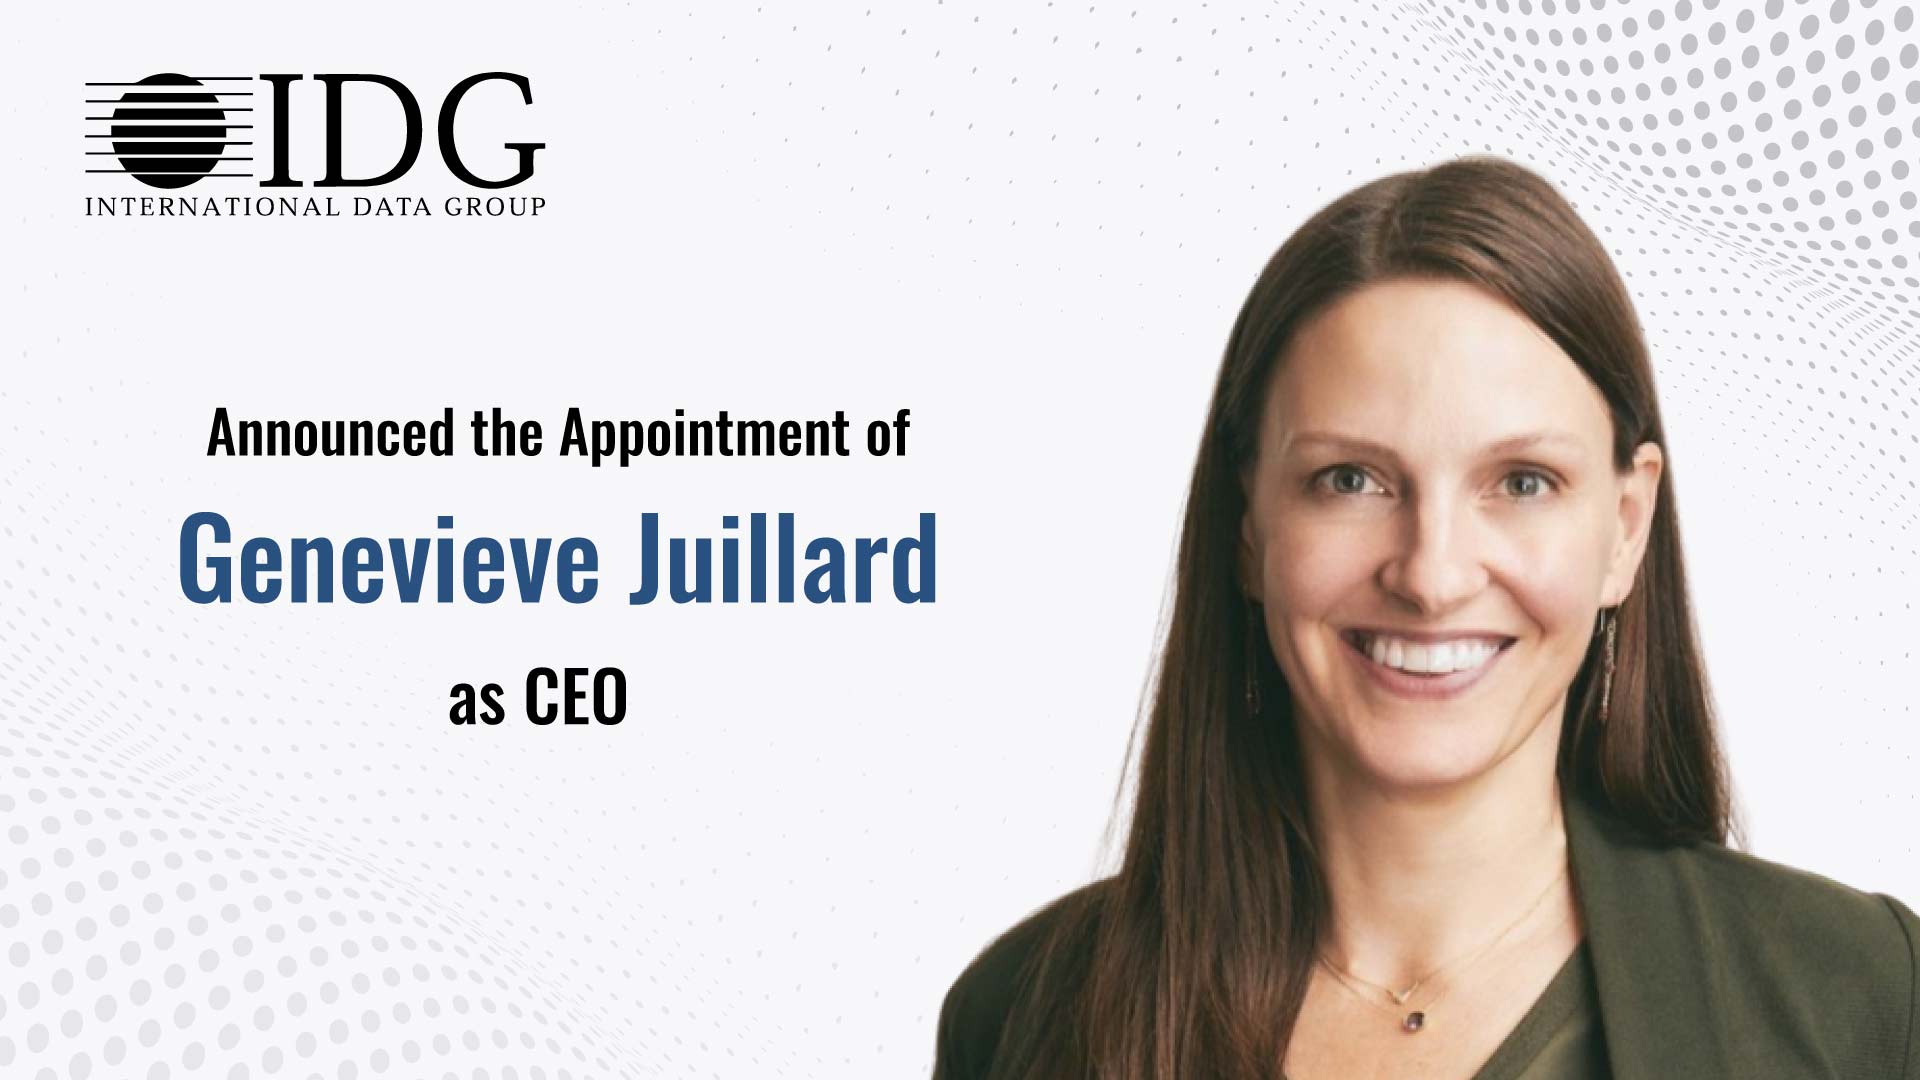 International Data Group Appoints Genevieve Juillard as Chief Executive Officer